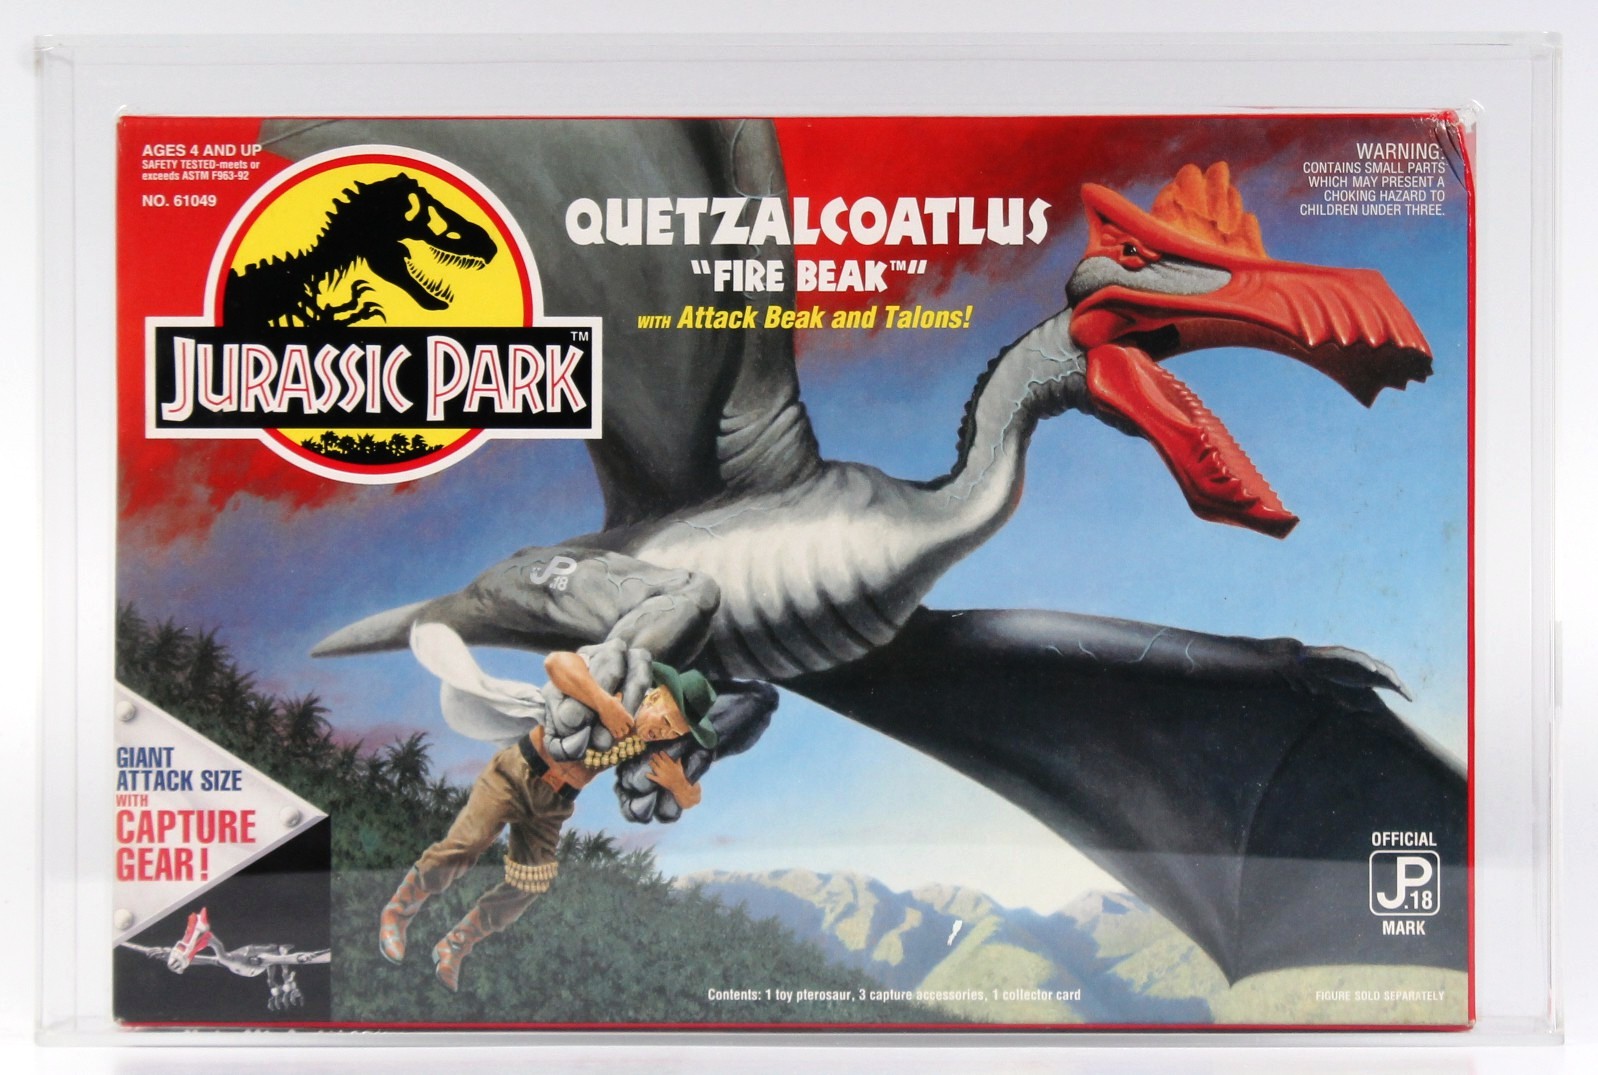 1993 Kenner Jurassic Park Boxed Action Figure - Quetzalcoatlus Fire Beak